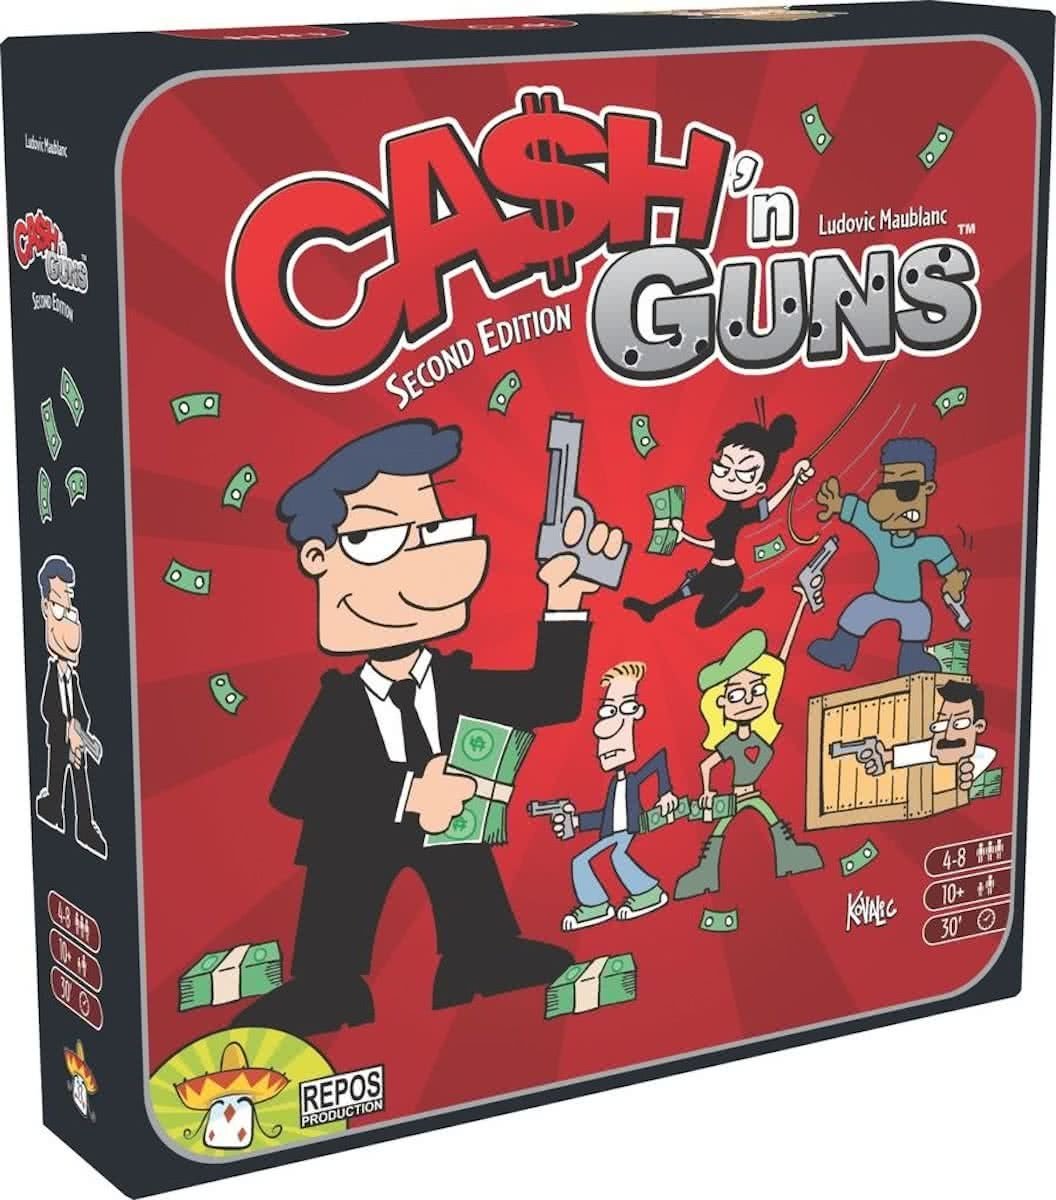 Cash 'n Guns 2nd ed. NL